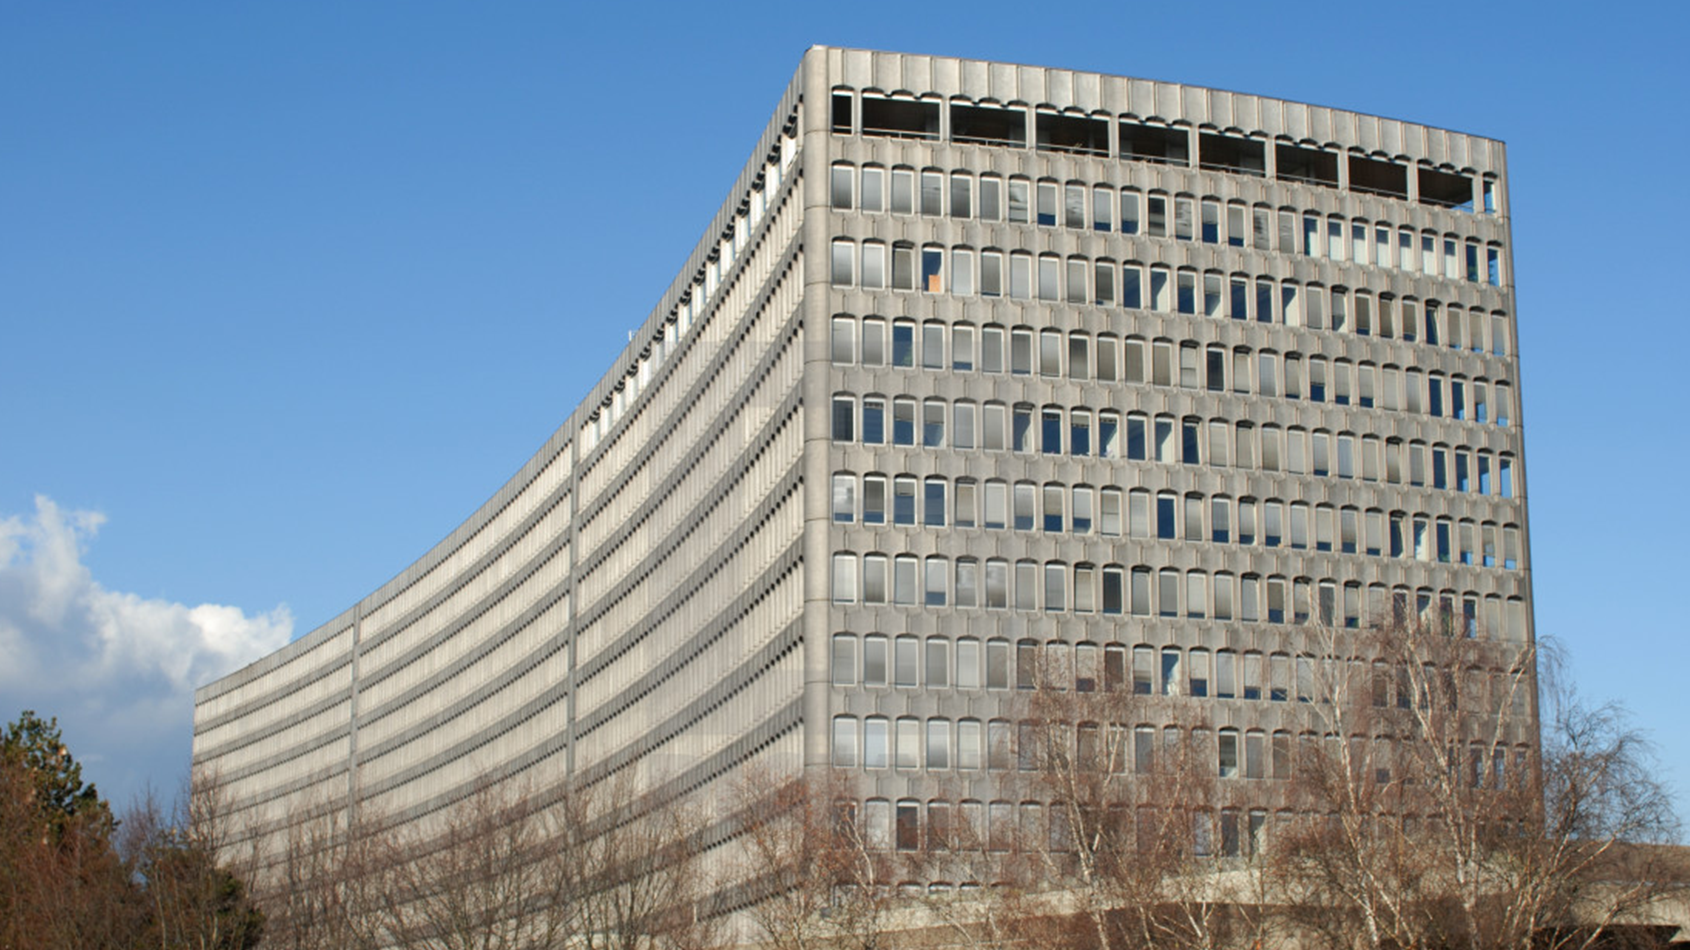 ILO offices in Geneva